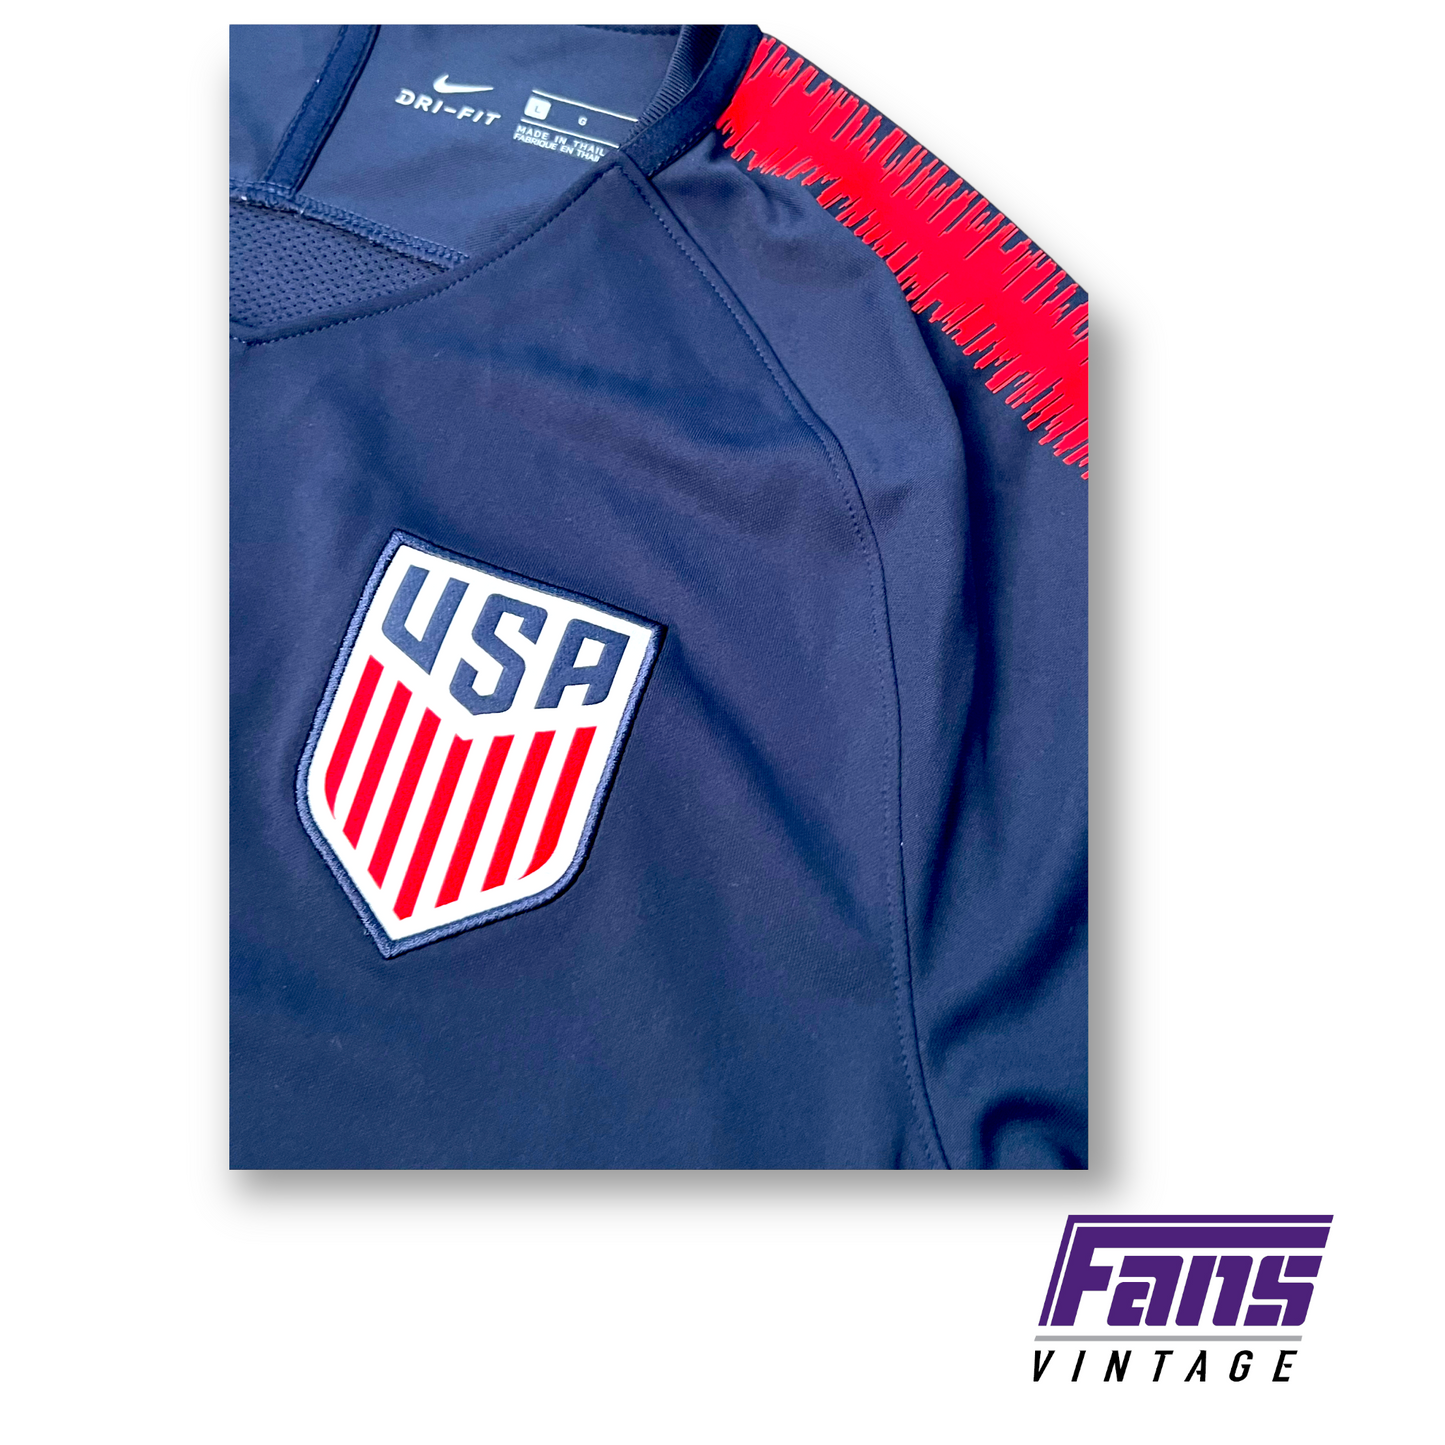 Nike Drifit Authentic USA Soccer Jersey